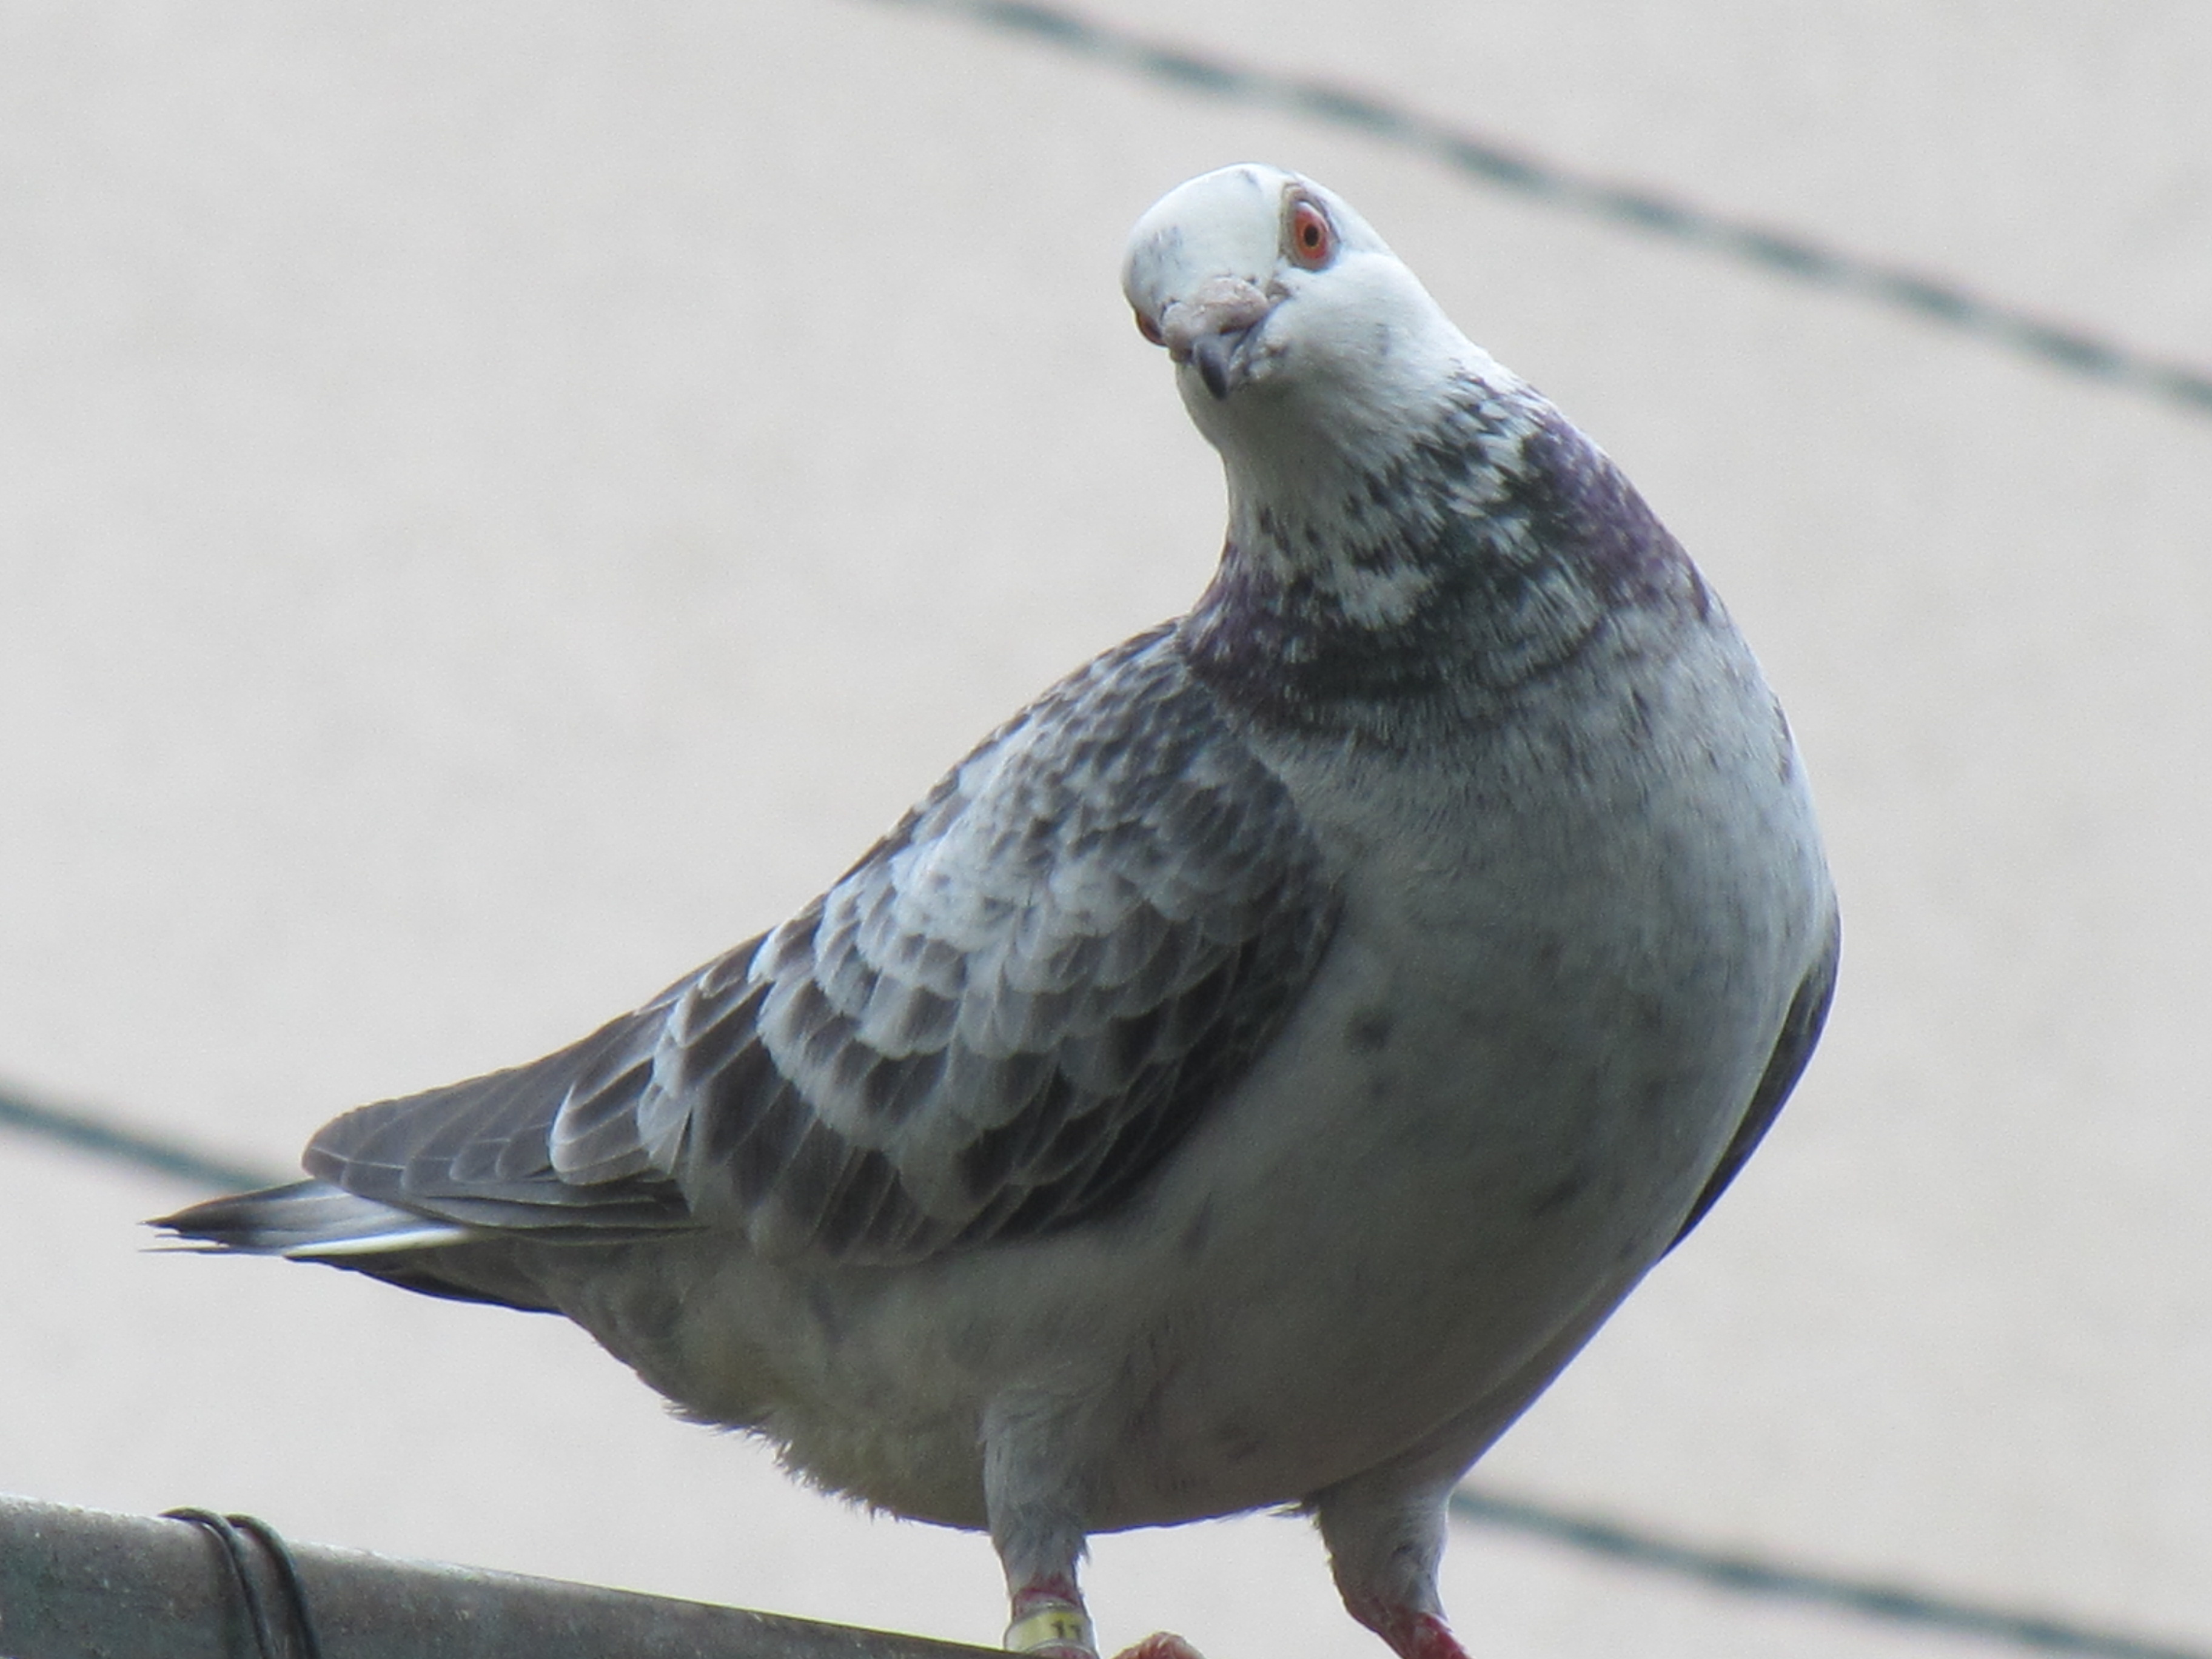 Curious dove, Animal, Bird, Curious, Dove, HQ Photo